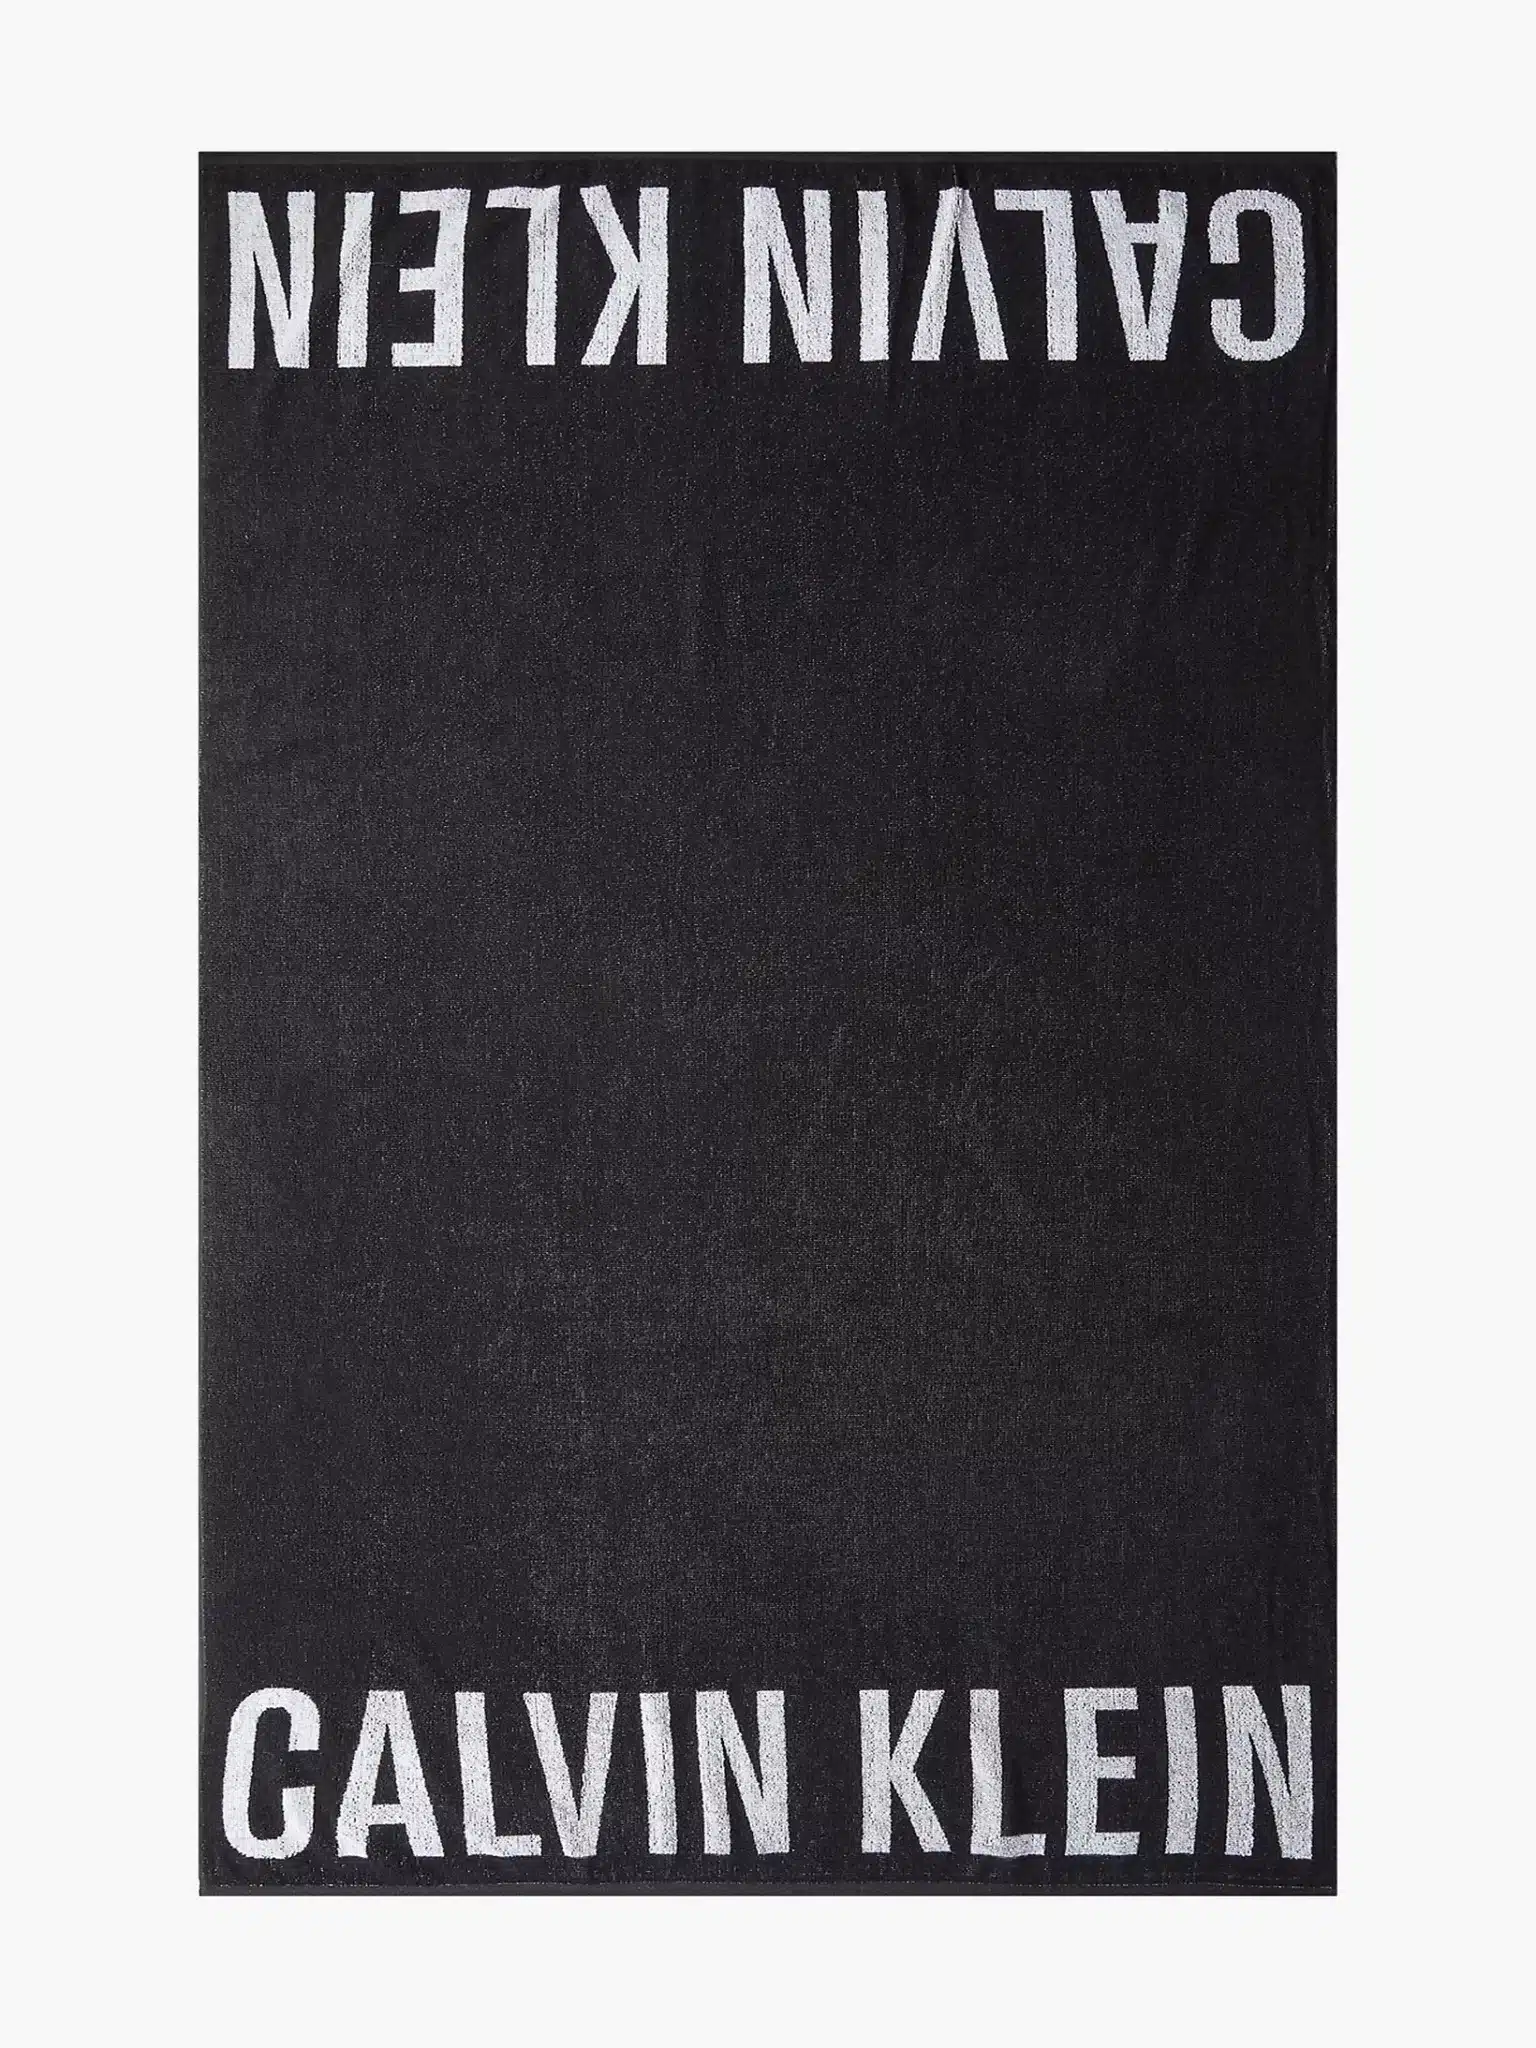 Buy Calvin Klein Beach Towel Black - Scandinavian Fashion Store